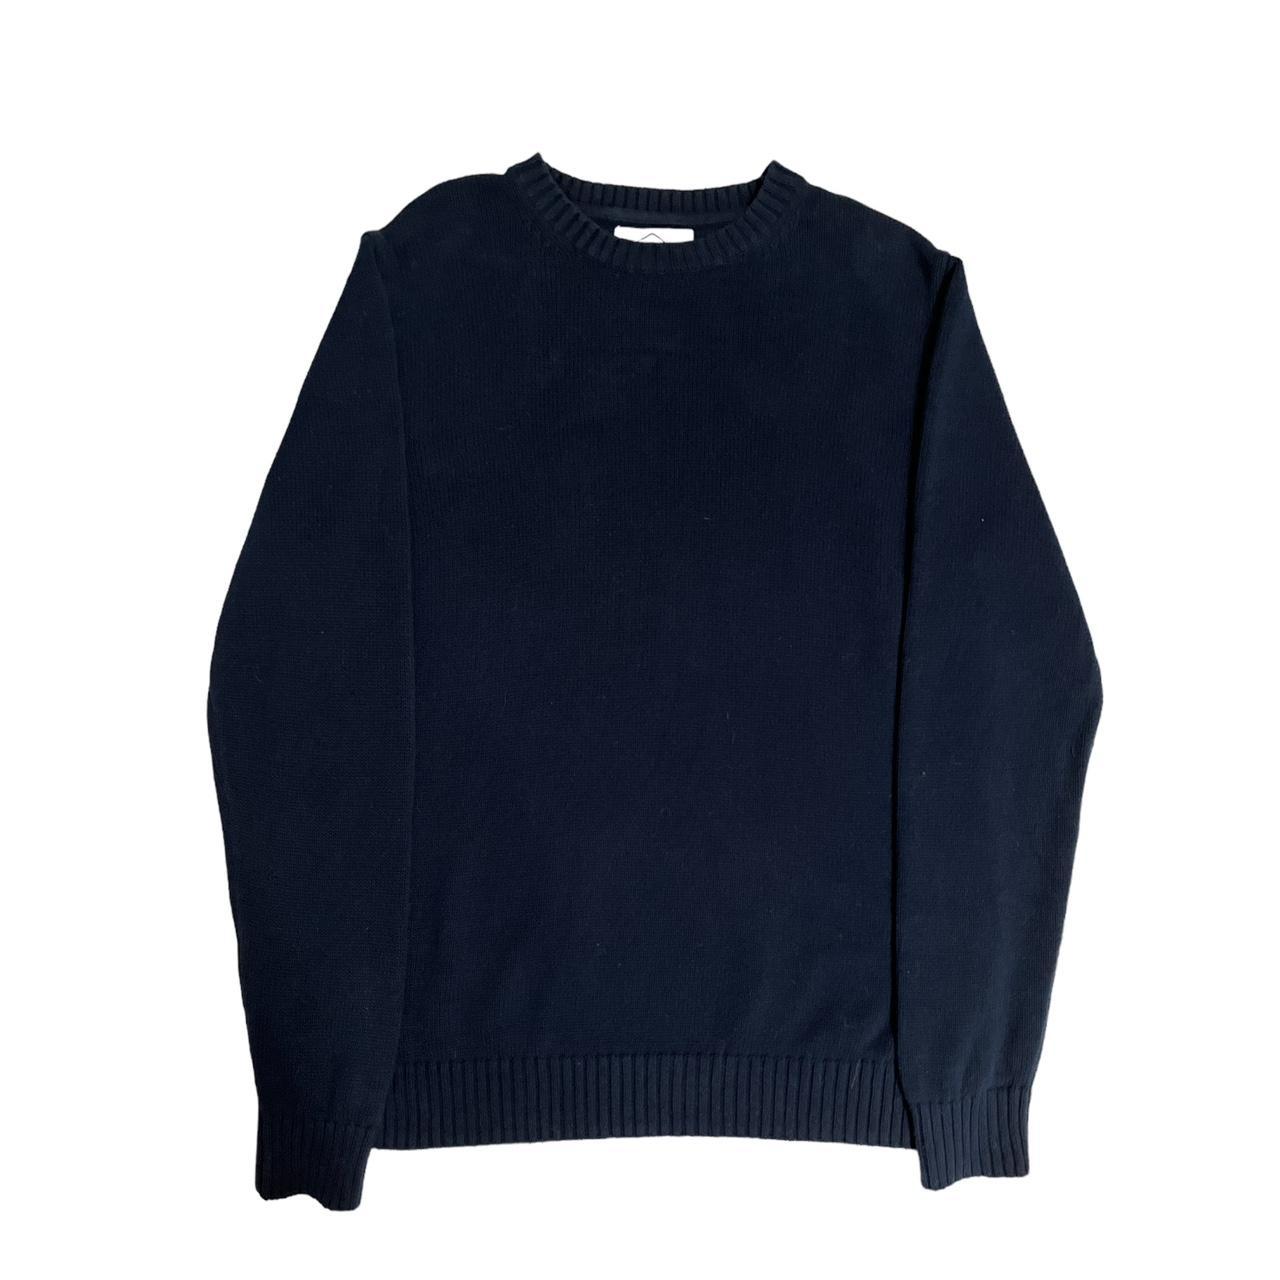 medium St. John’s bay blue knit sweater... - Depop